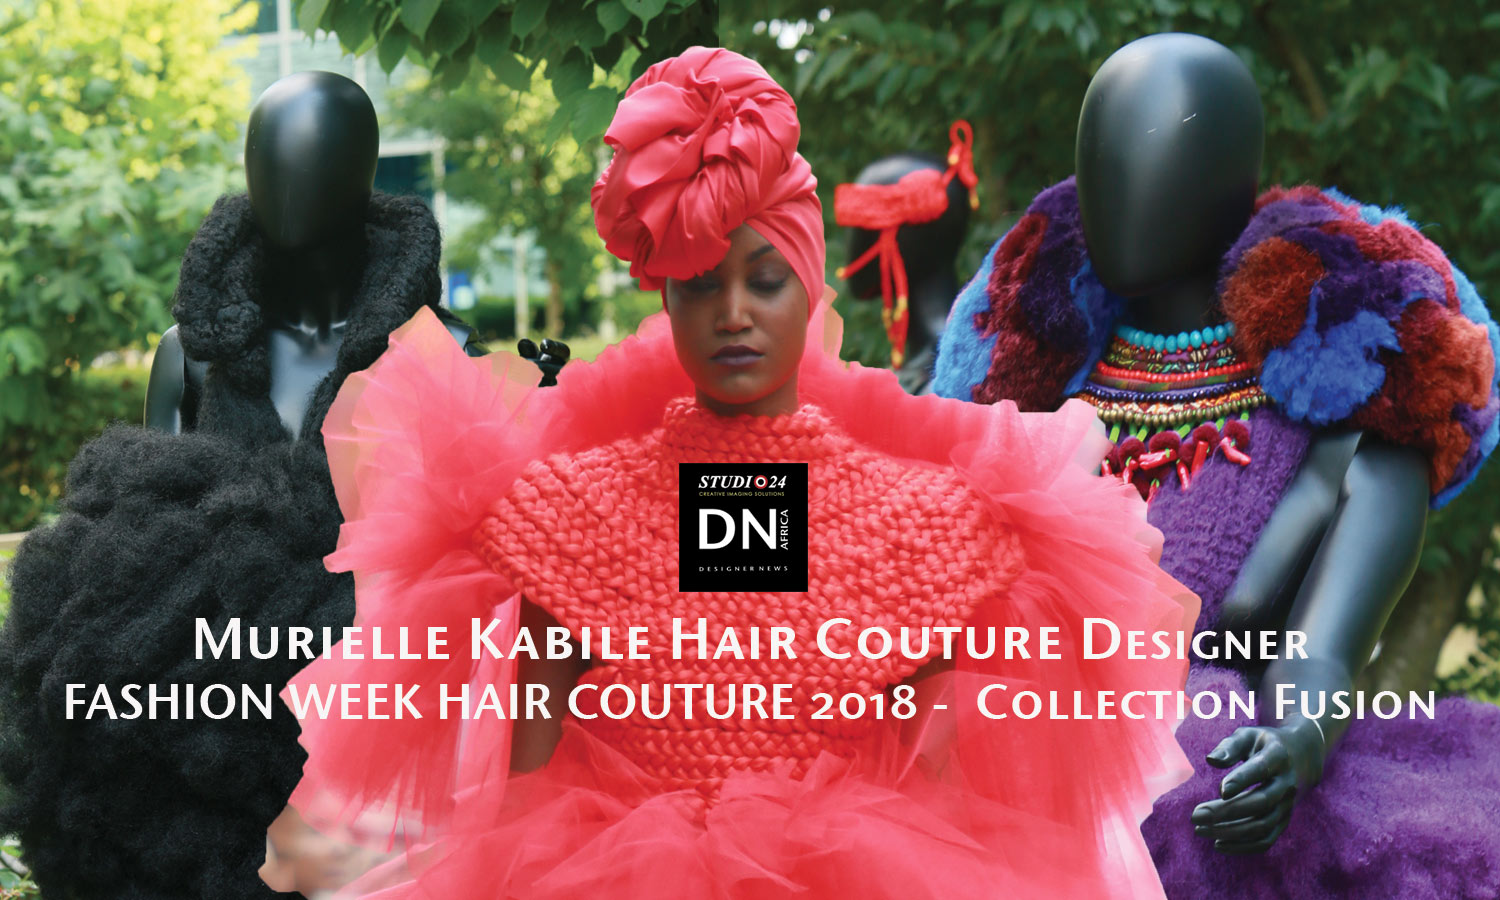 -Model Mariame Sakanoko - AFRICAN FASHION STYLE MAGAZINE - FASHION WEEK 2018 MURIELLE KABILE - HAIR Couture - COLLECTION FUSION - JARDIN PRIVE CANAL PLUS - Media Partner DN MAG, DN AFRICA -STUDIO 24 NIGERIA  